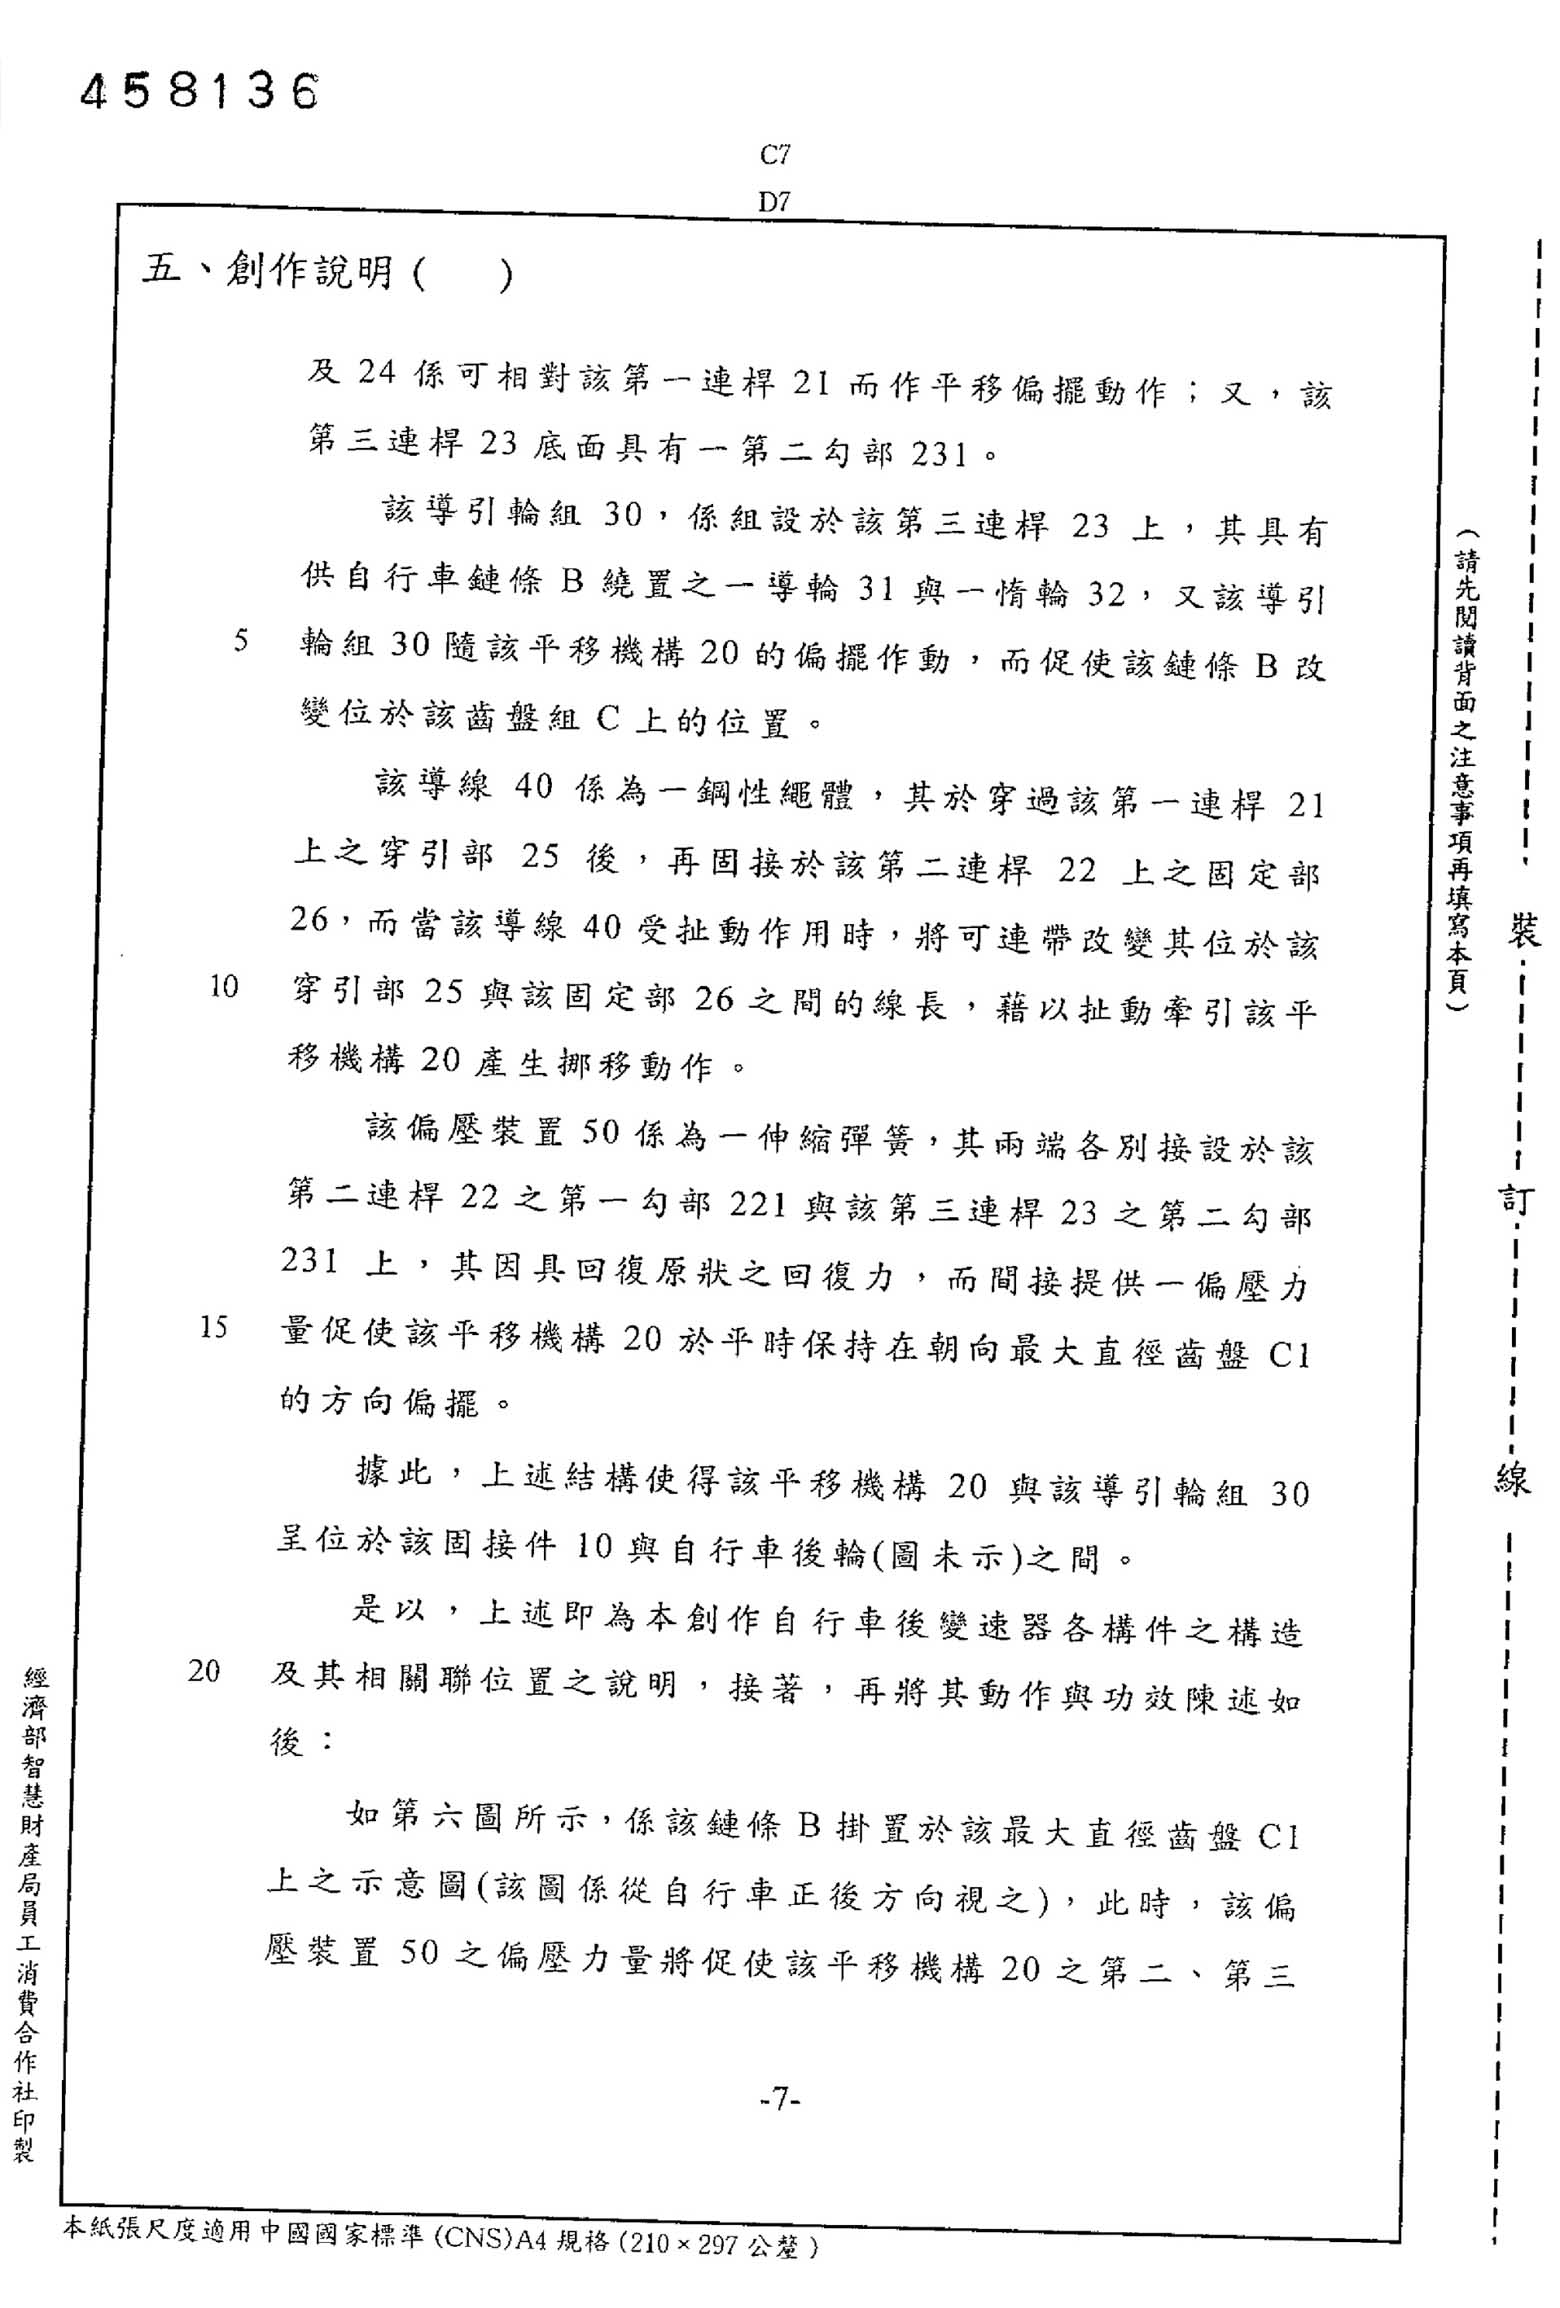 Taiwan patent 458,136 - Falcon scan 7 main image